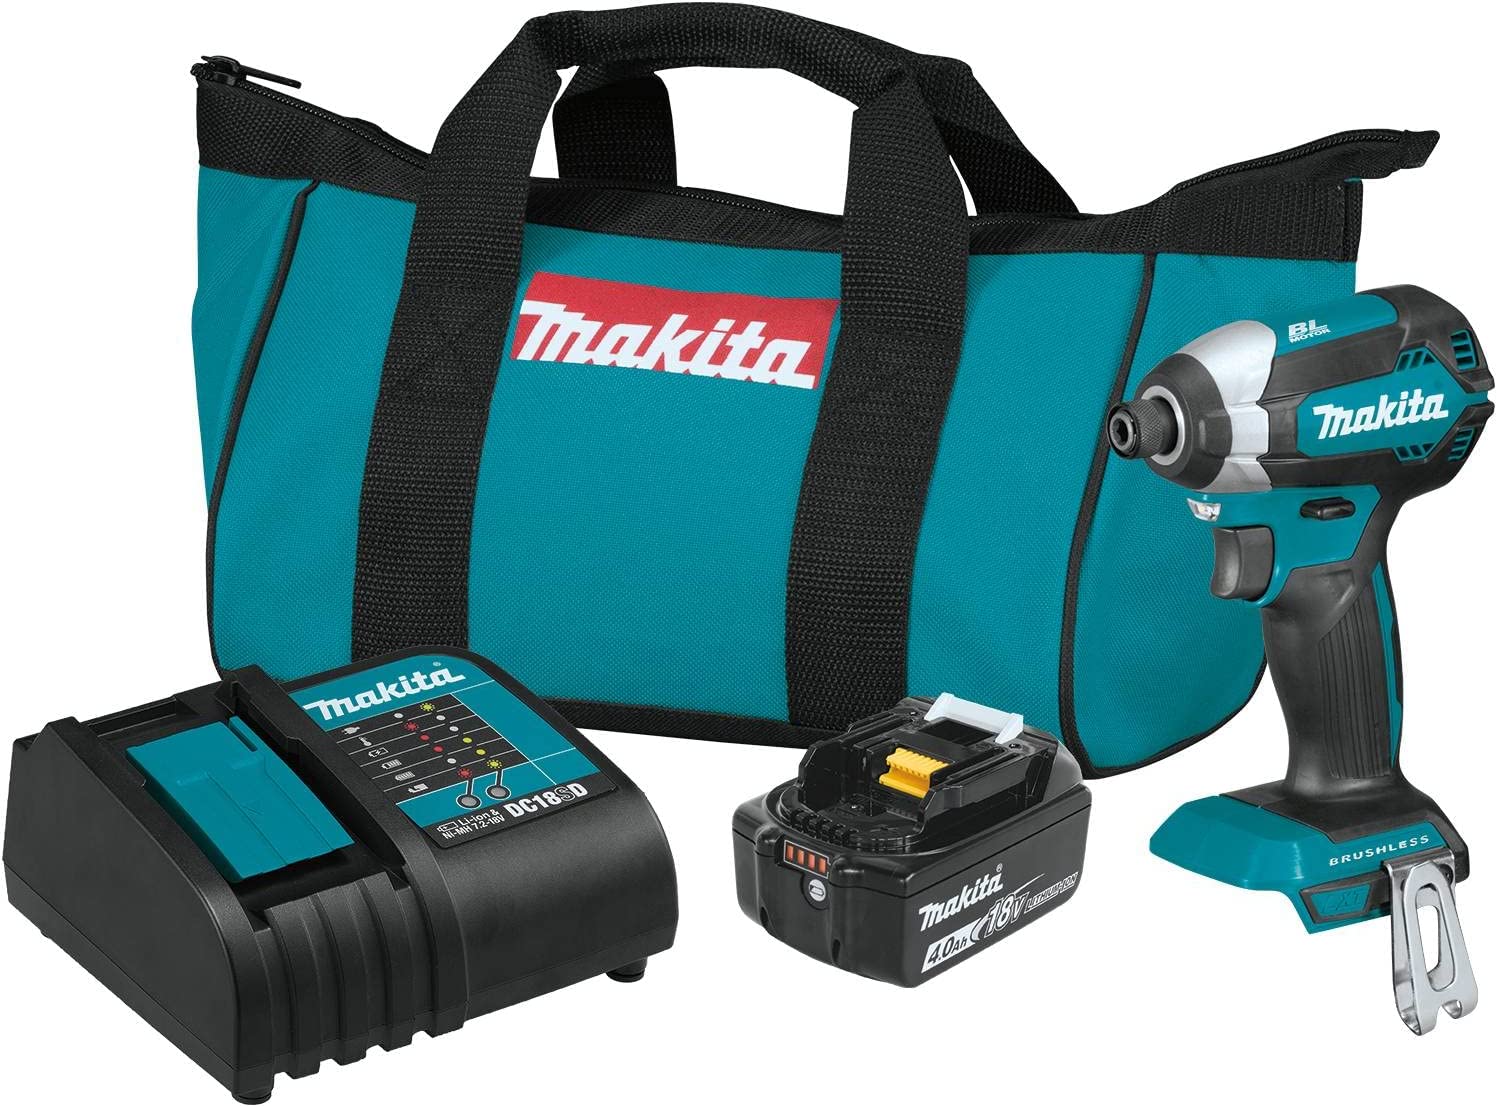 Makita XDT13SM1 18V Lithium-Ion Brushless Impact Driver Kit w/ 4Ah Battery $79 + Free S/h